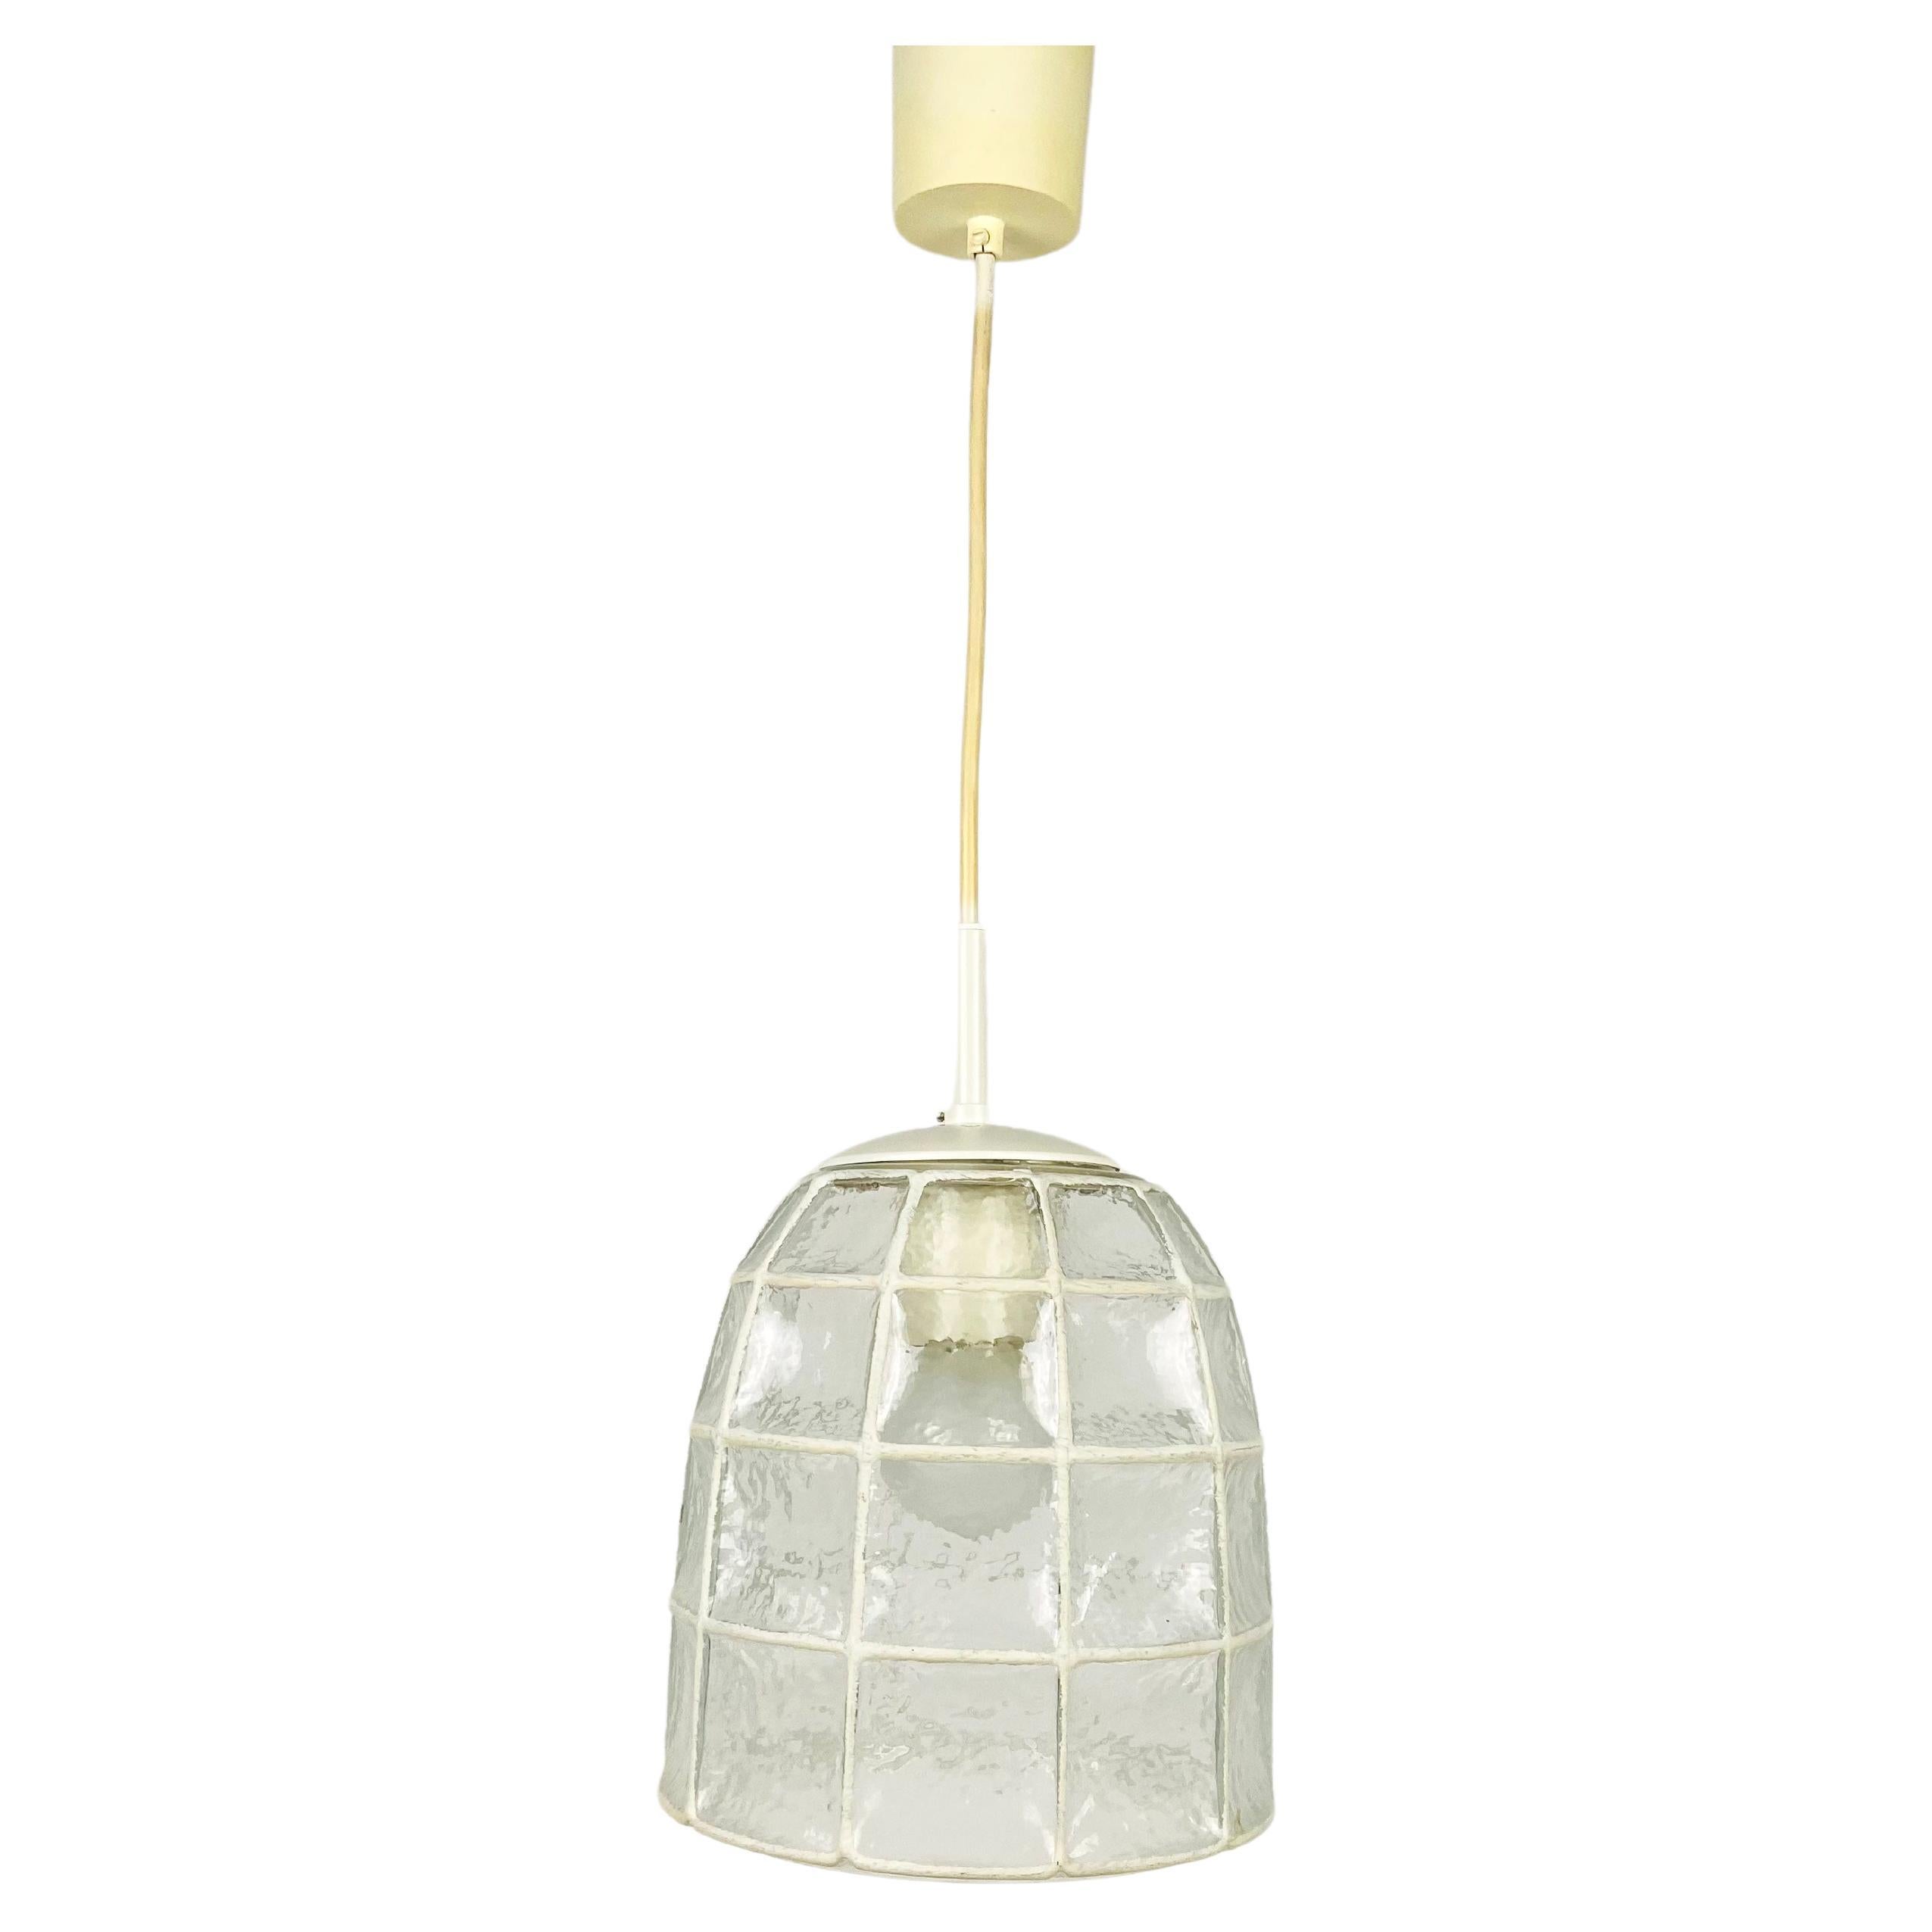 Midcentury Iron and Bubble Glass Pendant lamp by Glashütte Limburg, 1960s For Sale